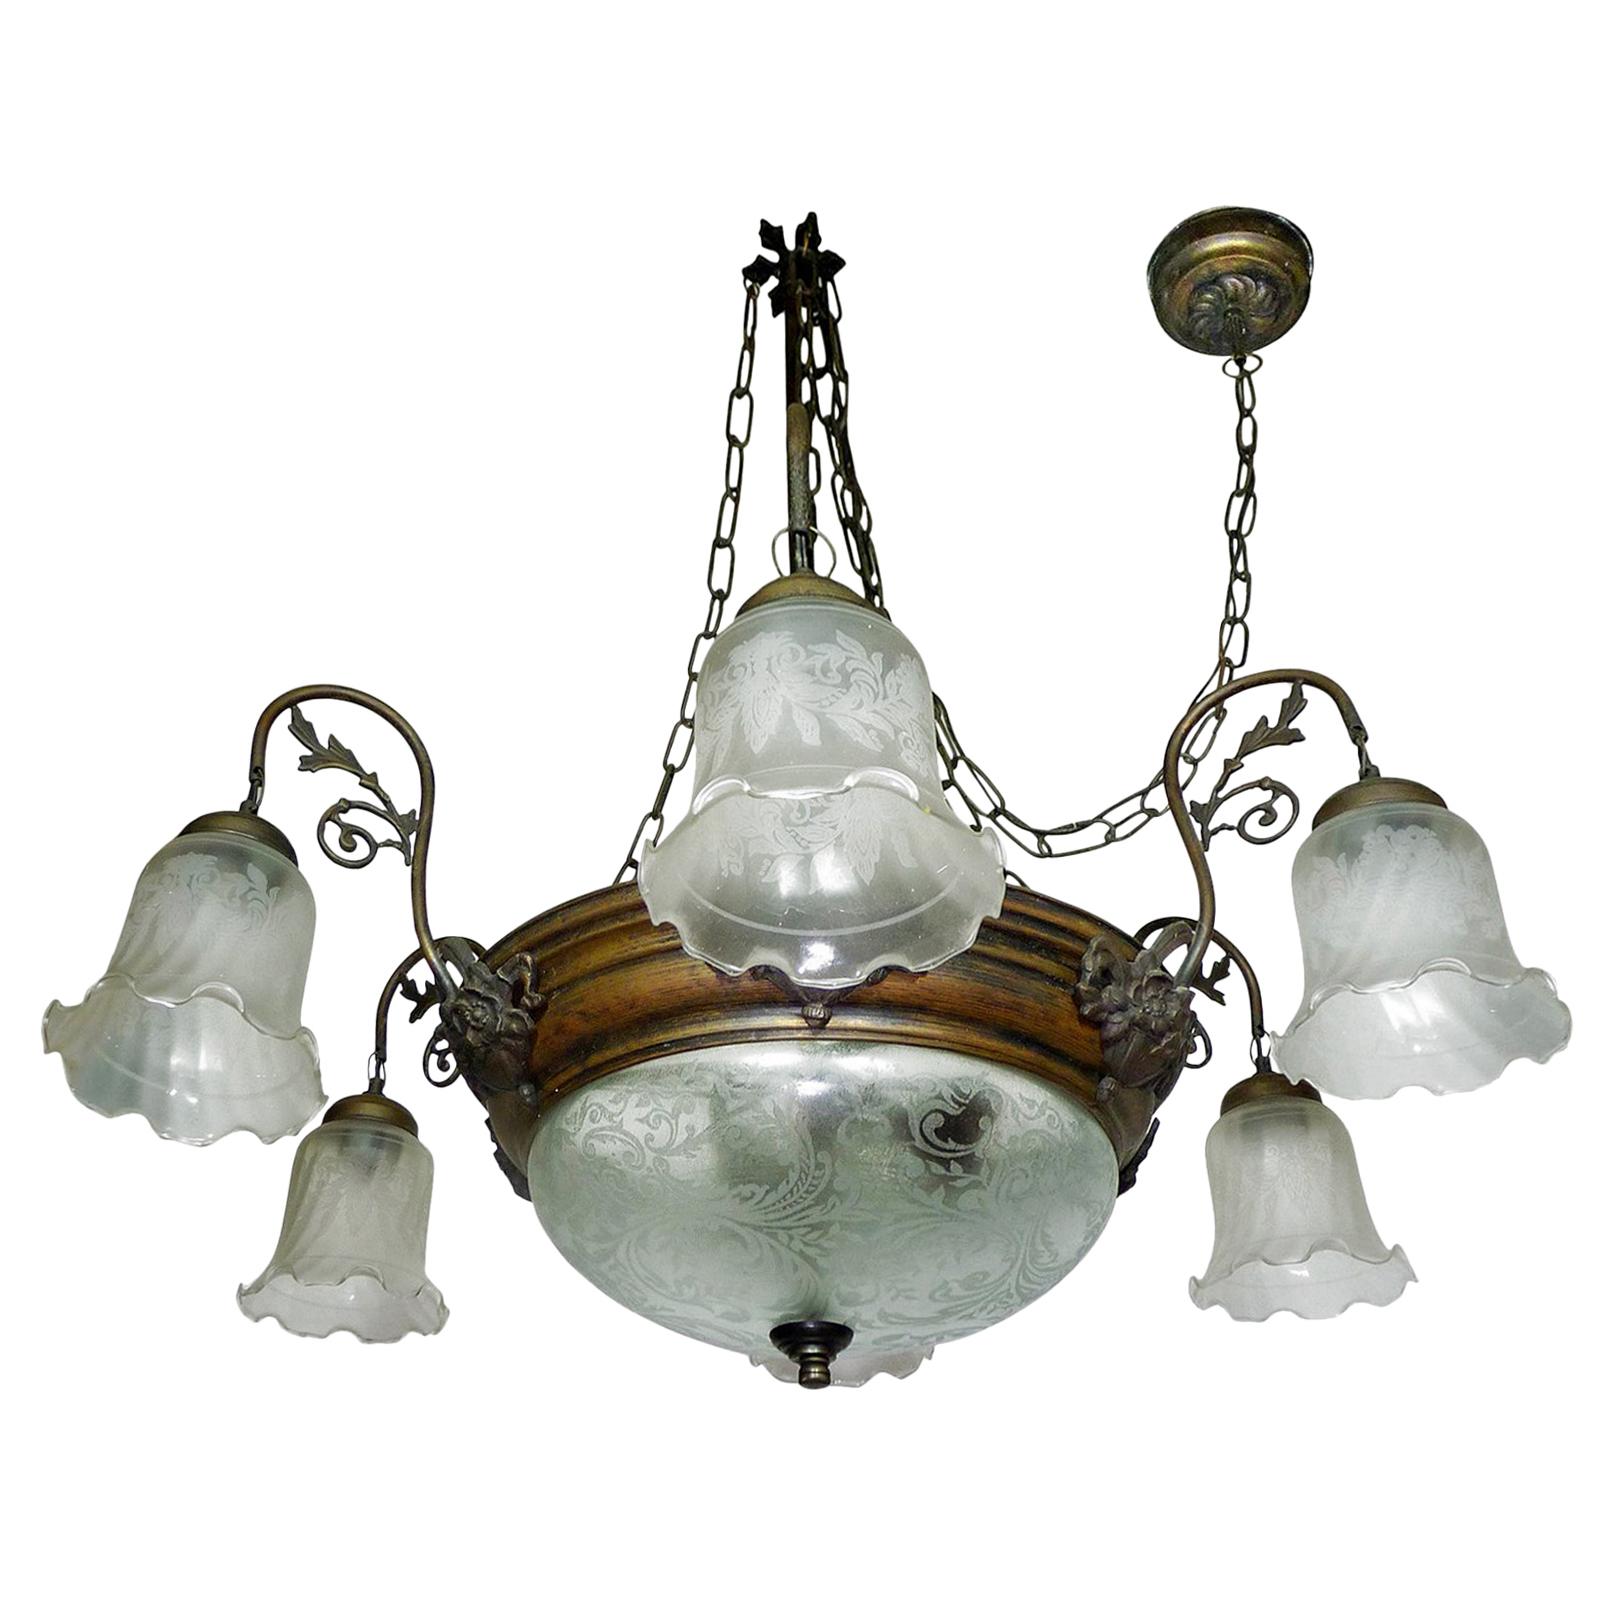 Large French Art Deco and Art Nouveau Etched Art Glass 8-Light Chandelier 1930s